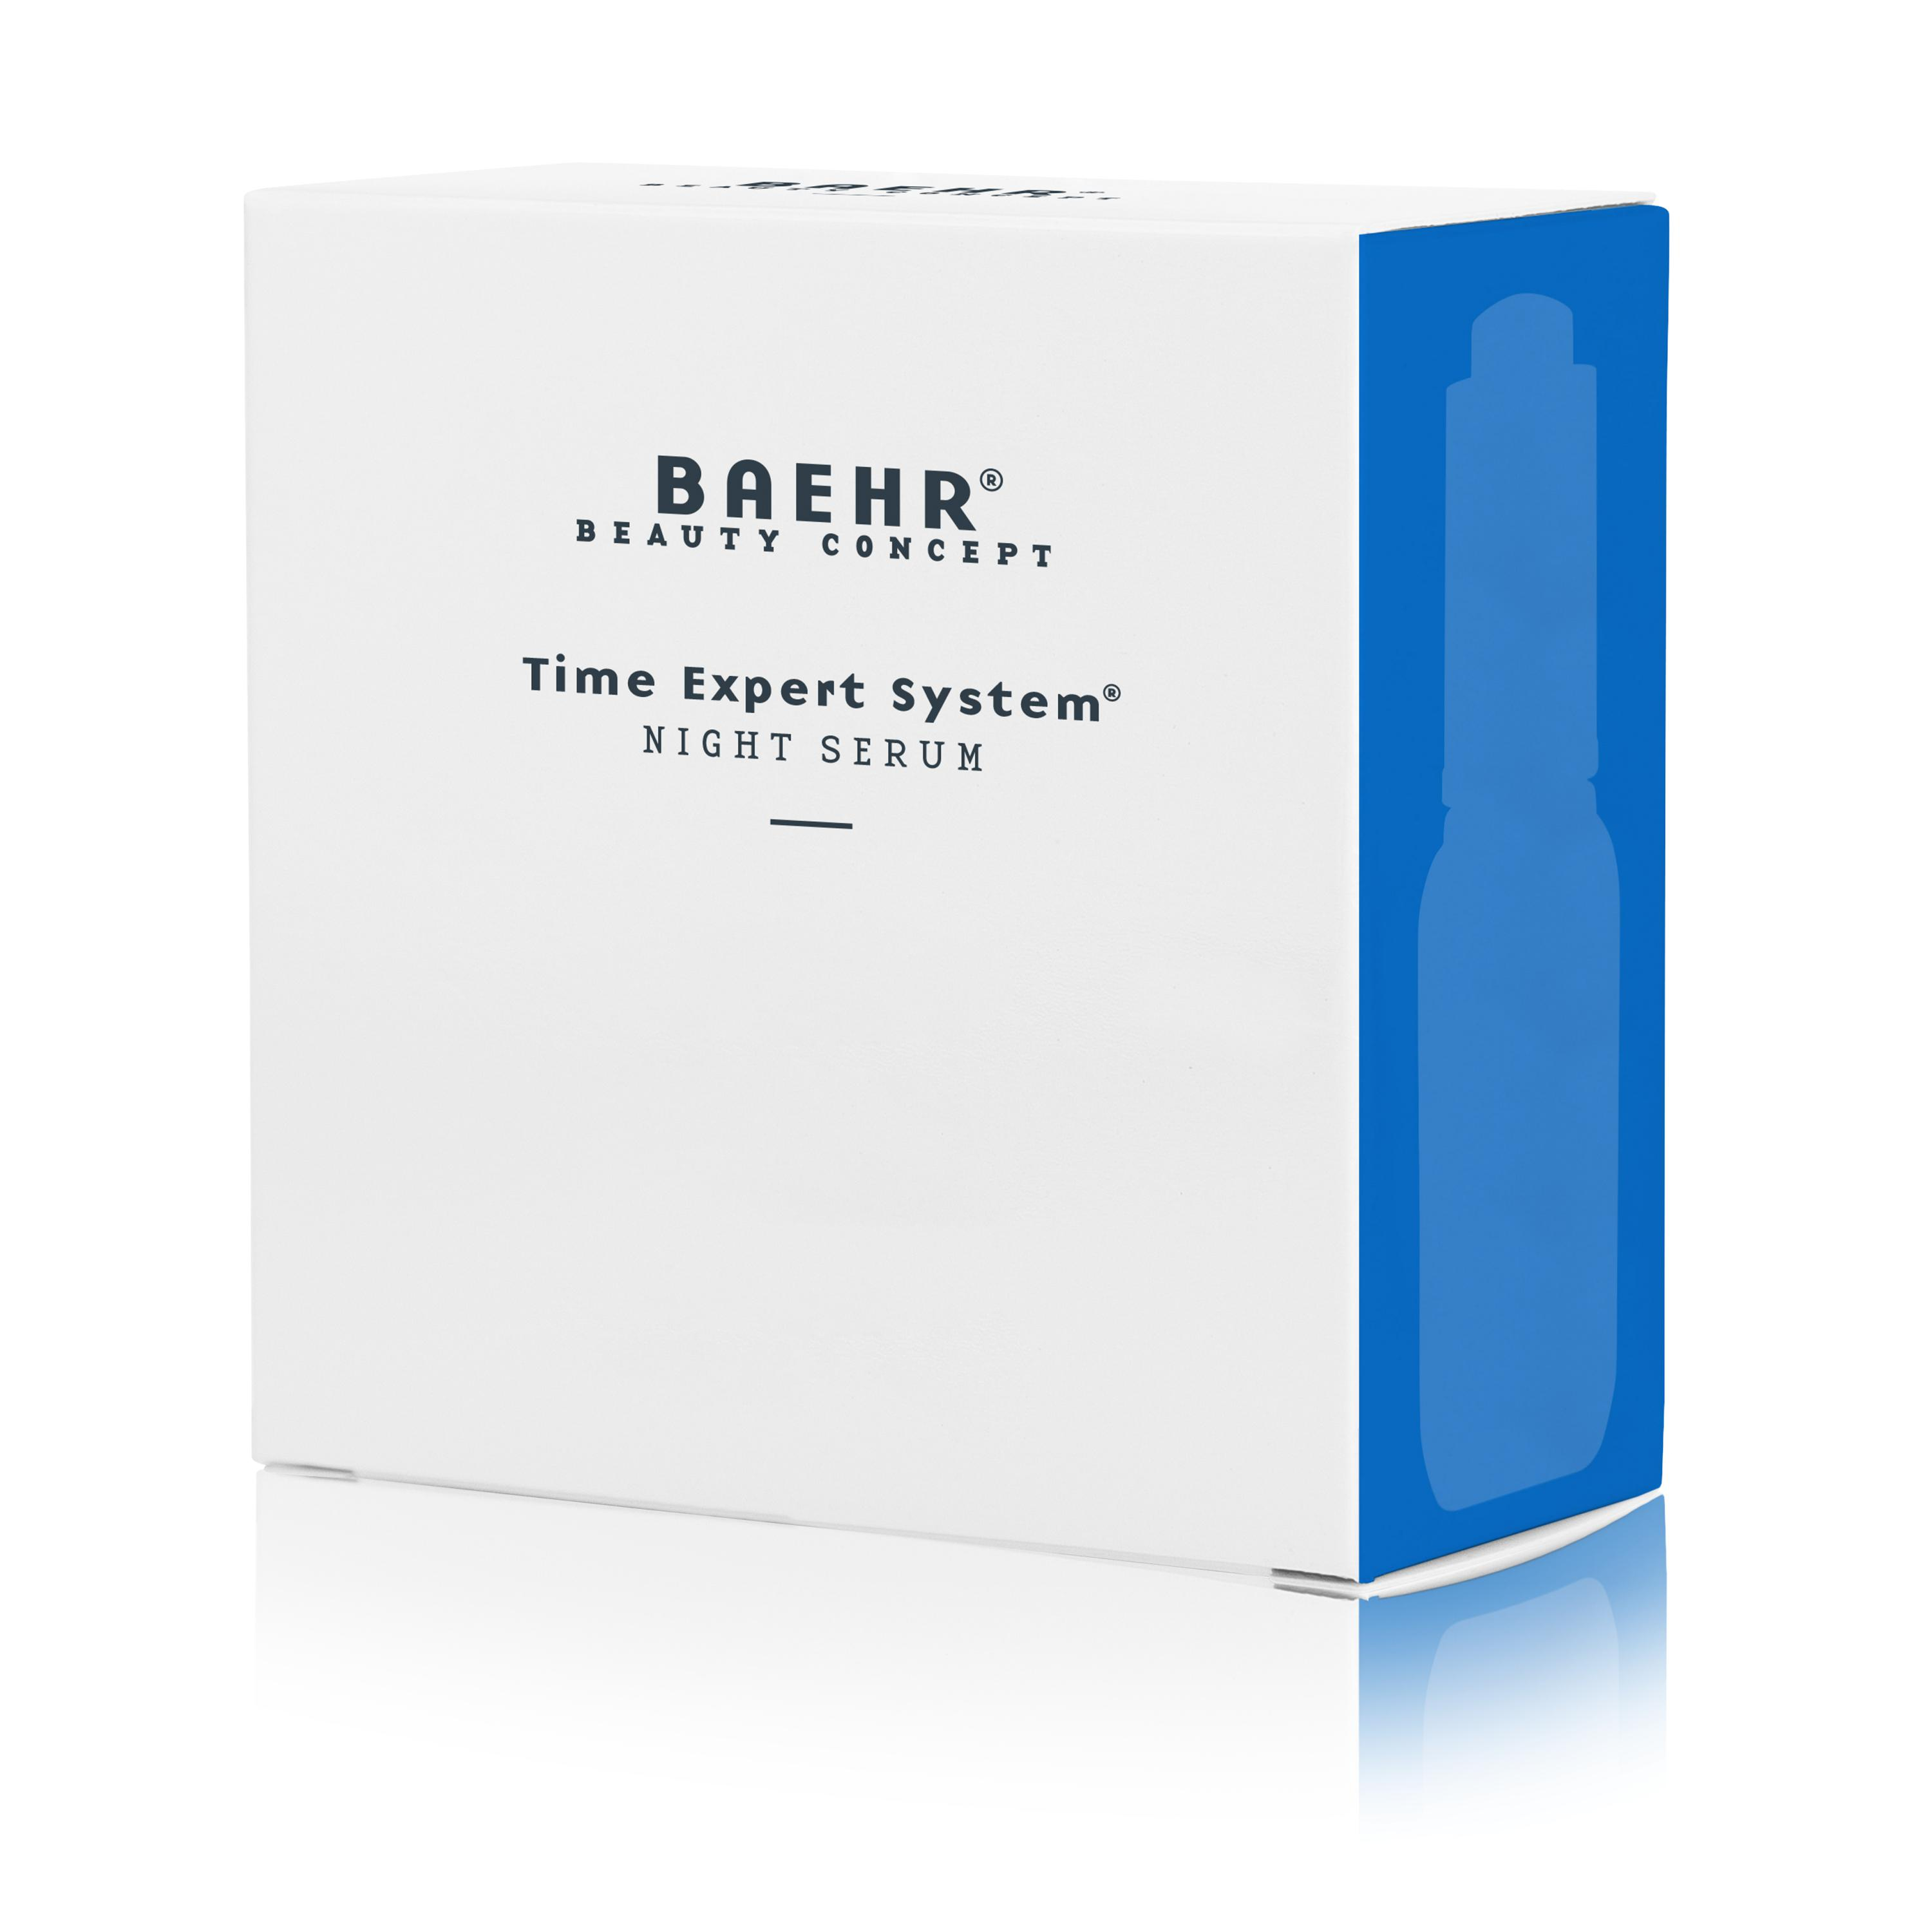 BAEHR BEAUTY CONCEPT Time Expert System | Night Serum 15 ml